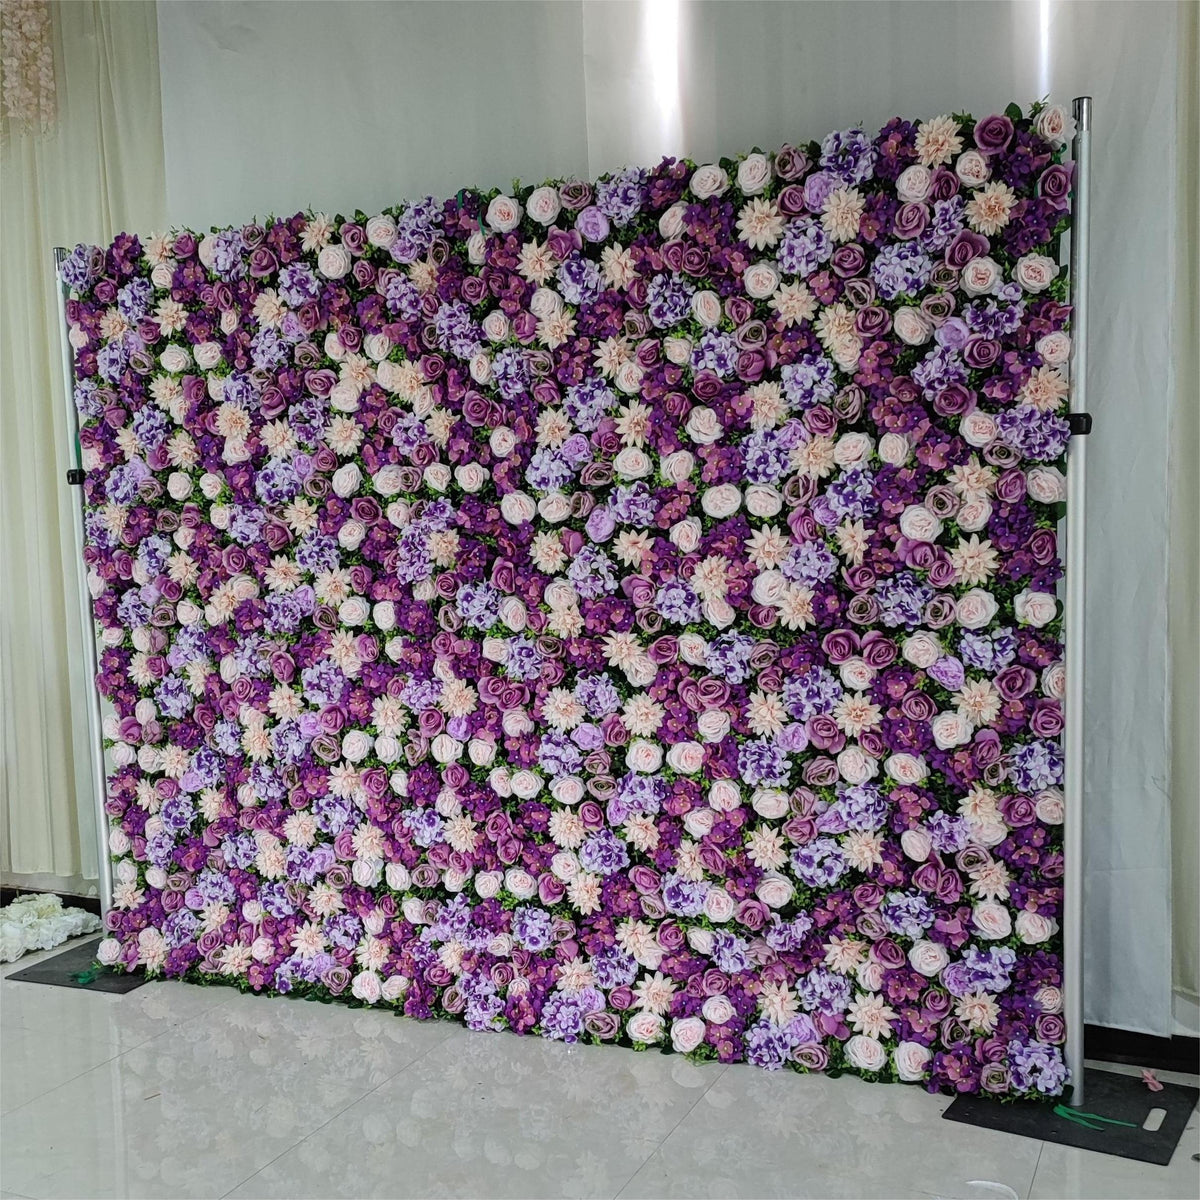 3D Artificial Flower Wall Arrangement Wedding Party Birthday Backdrop Decor HQ3837